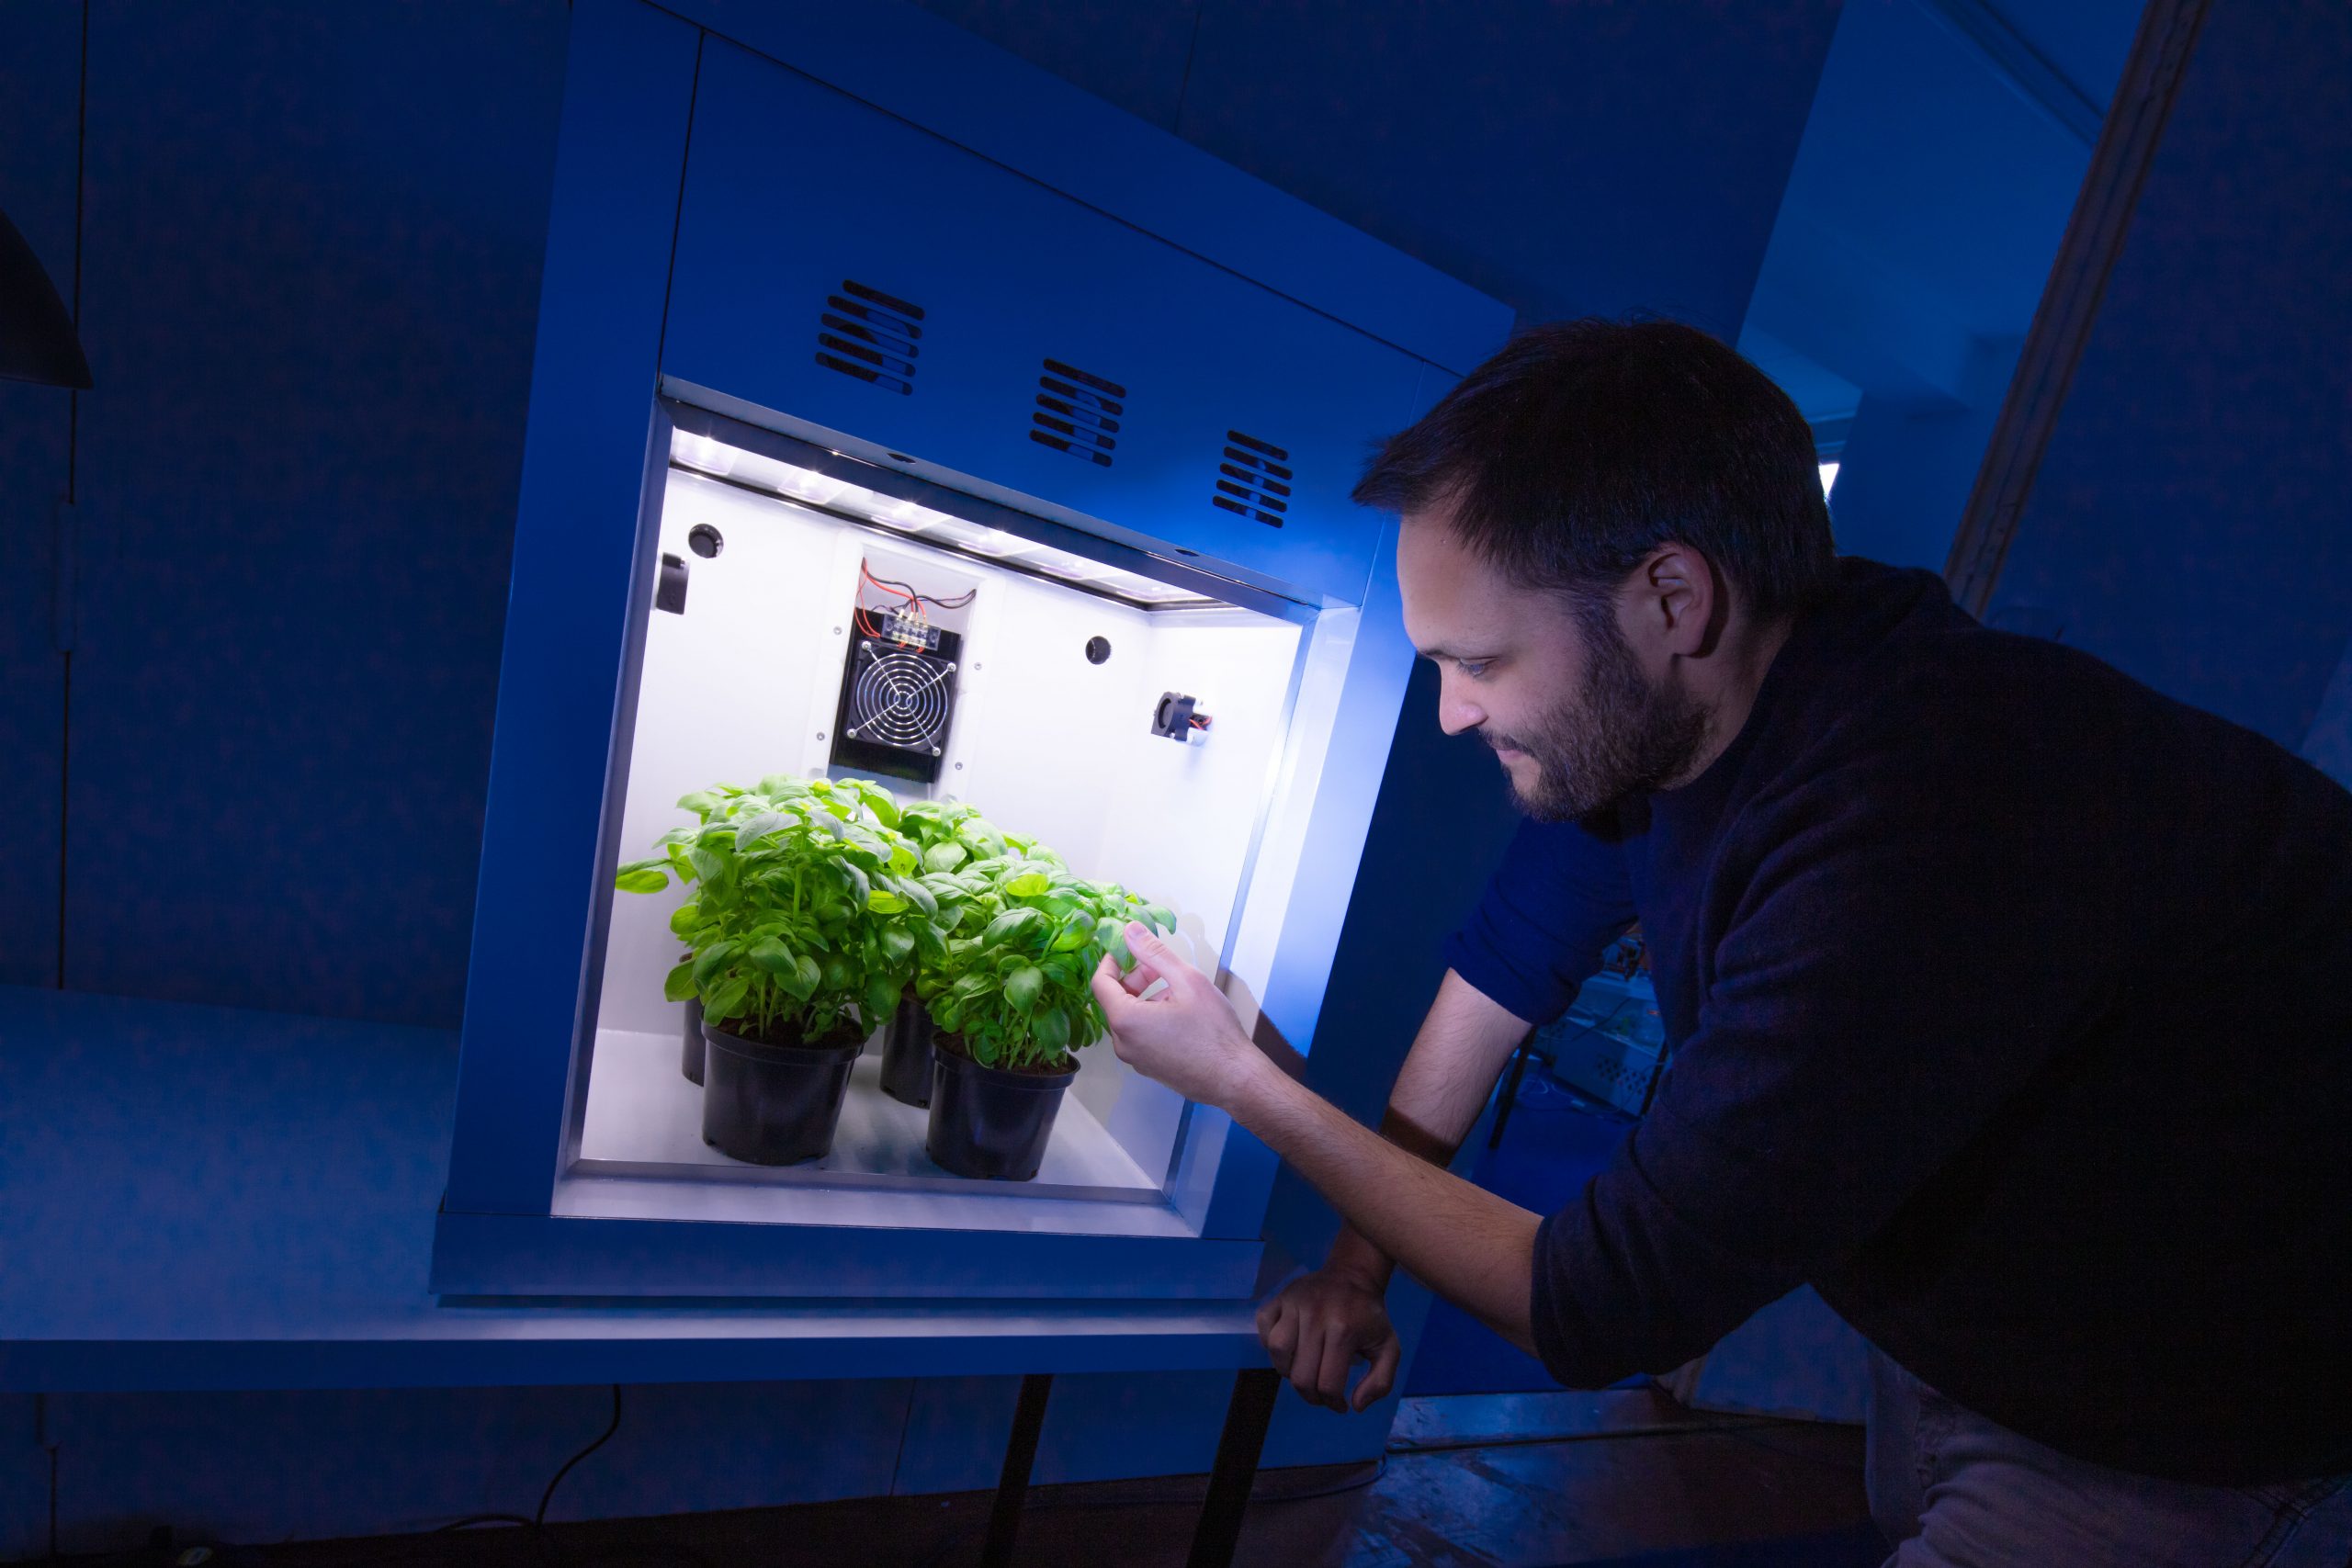 Grobotics: Research driving an indoor farming revolution